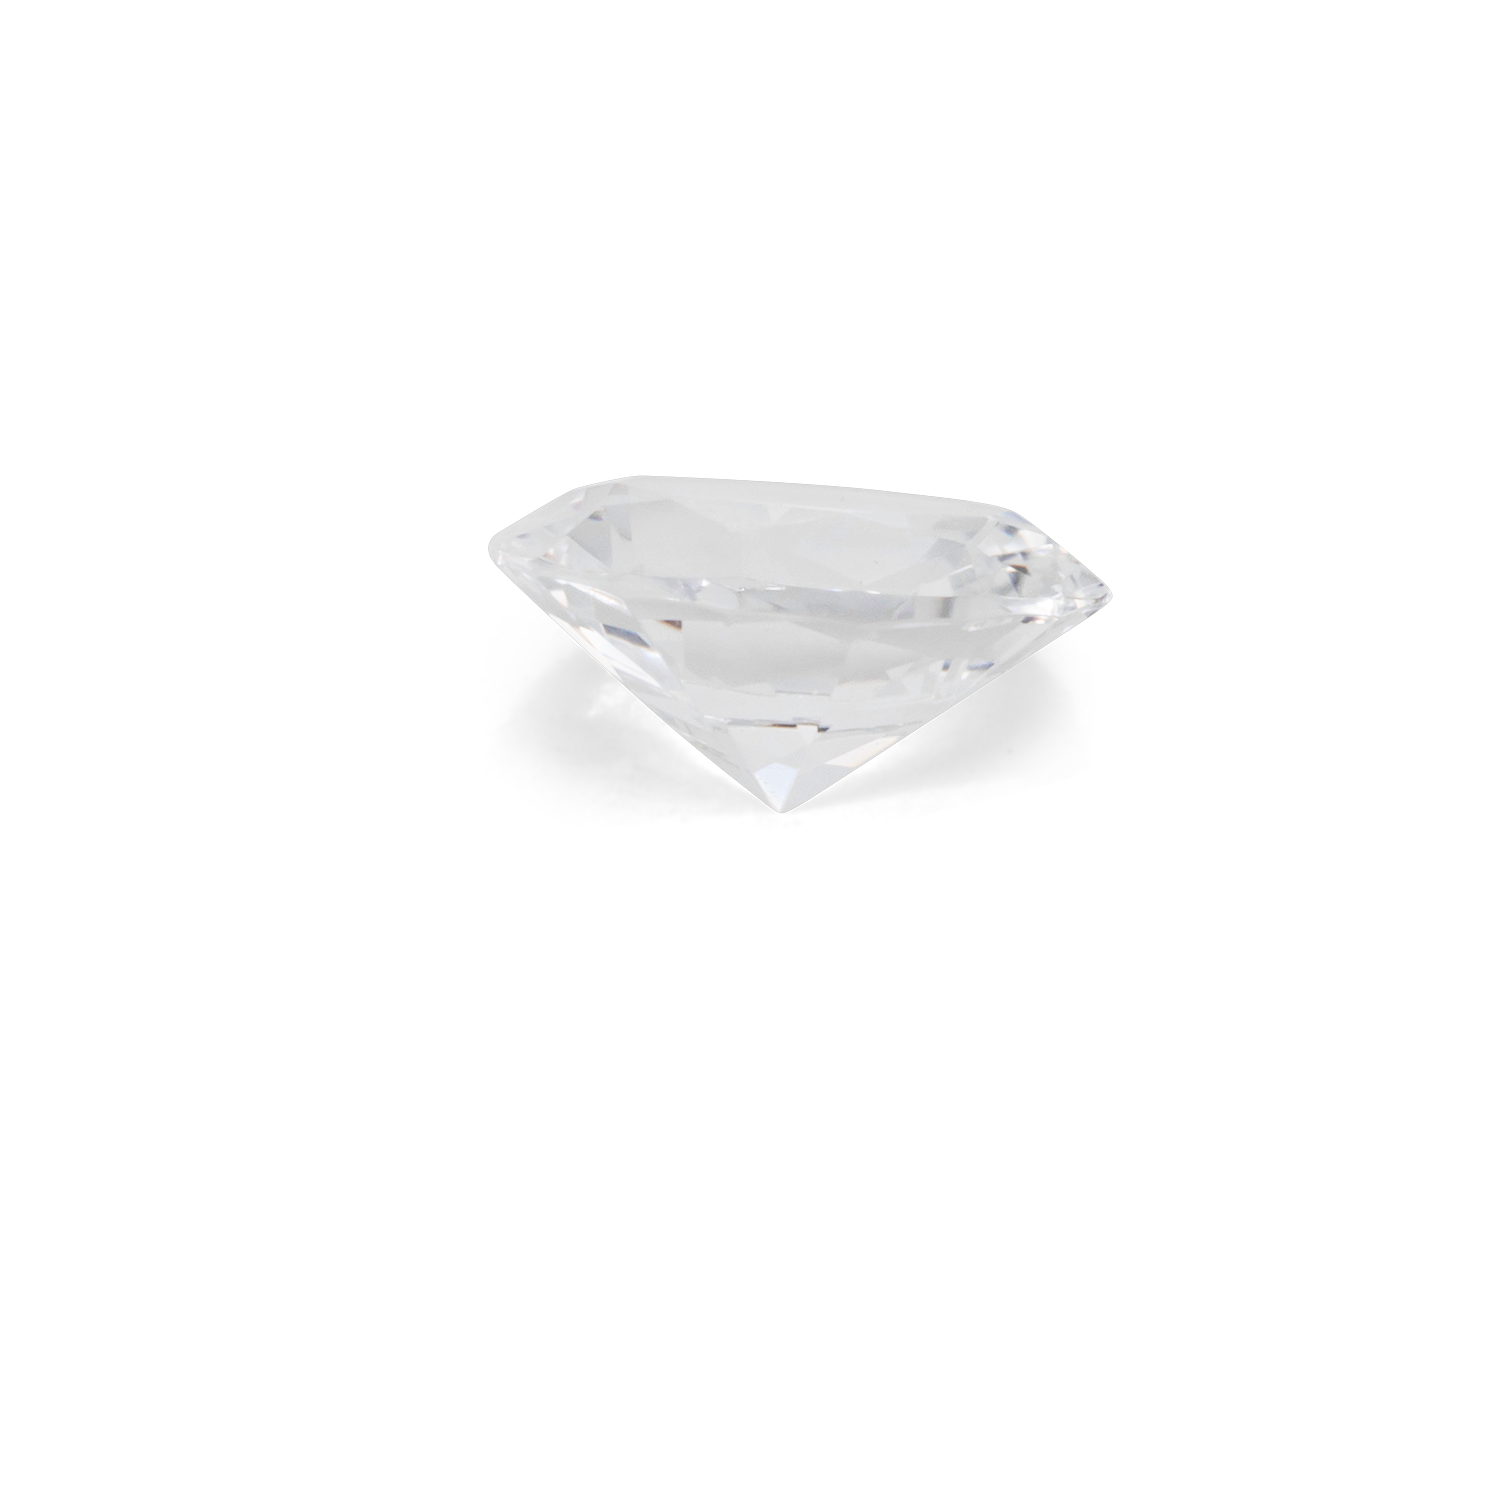 Beryll - weiß, oval, 8x6,1 mm, 1,05 cts, Nr. BY90012